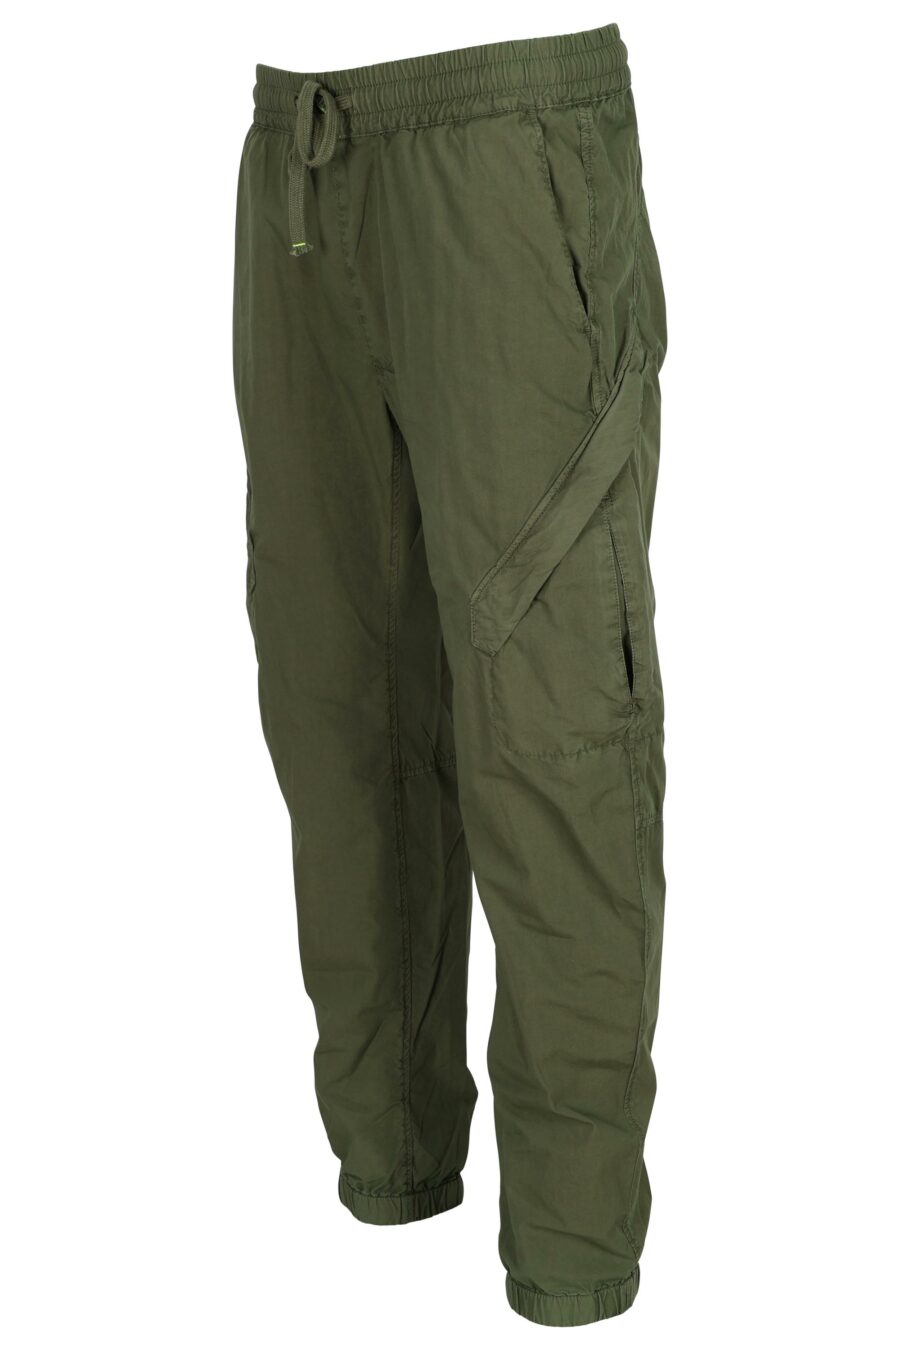 Pantalón verde militar estilo cargo con resorte - 8058610767143 1